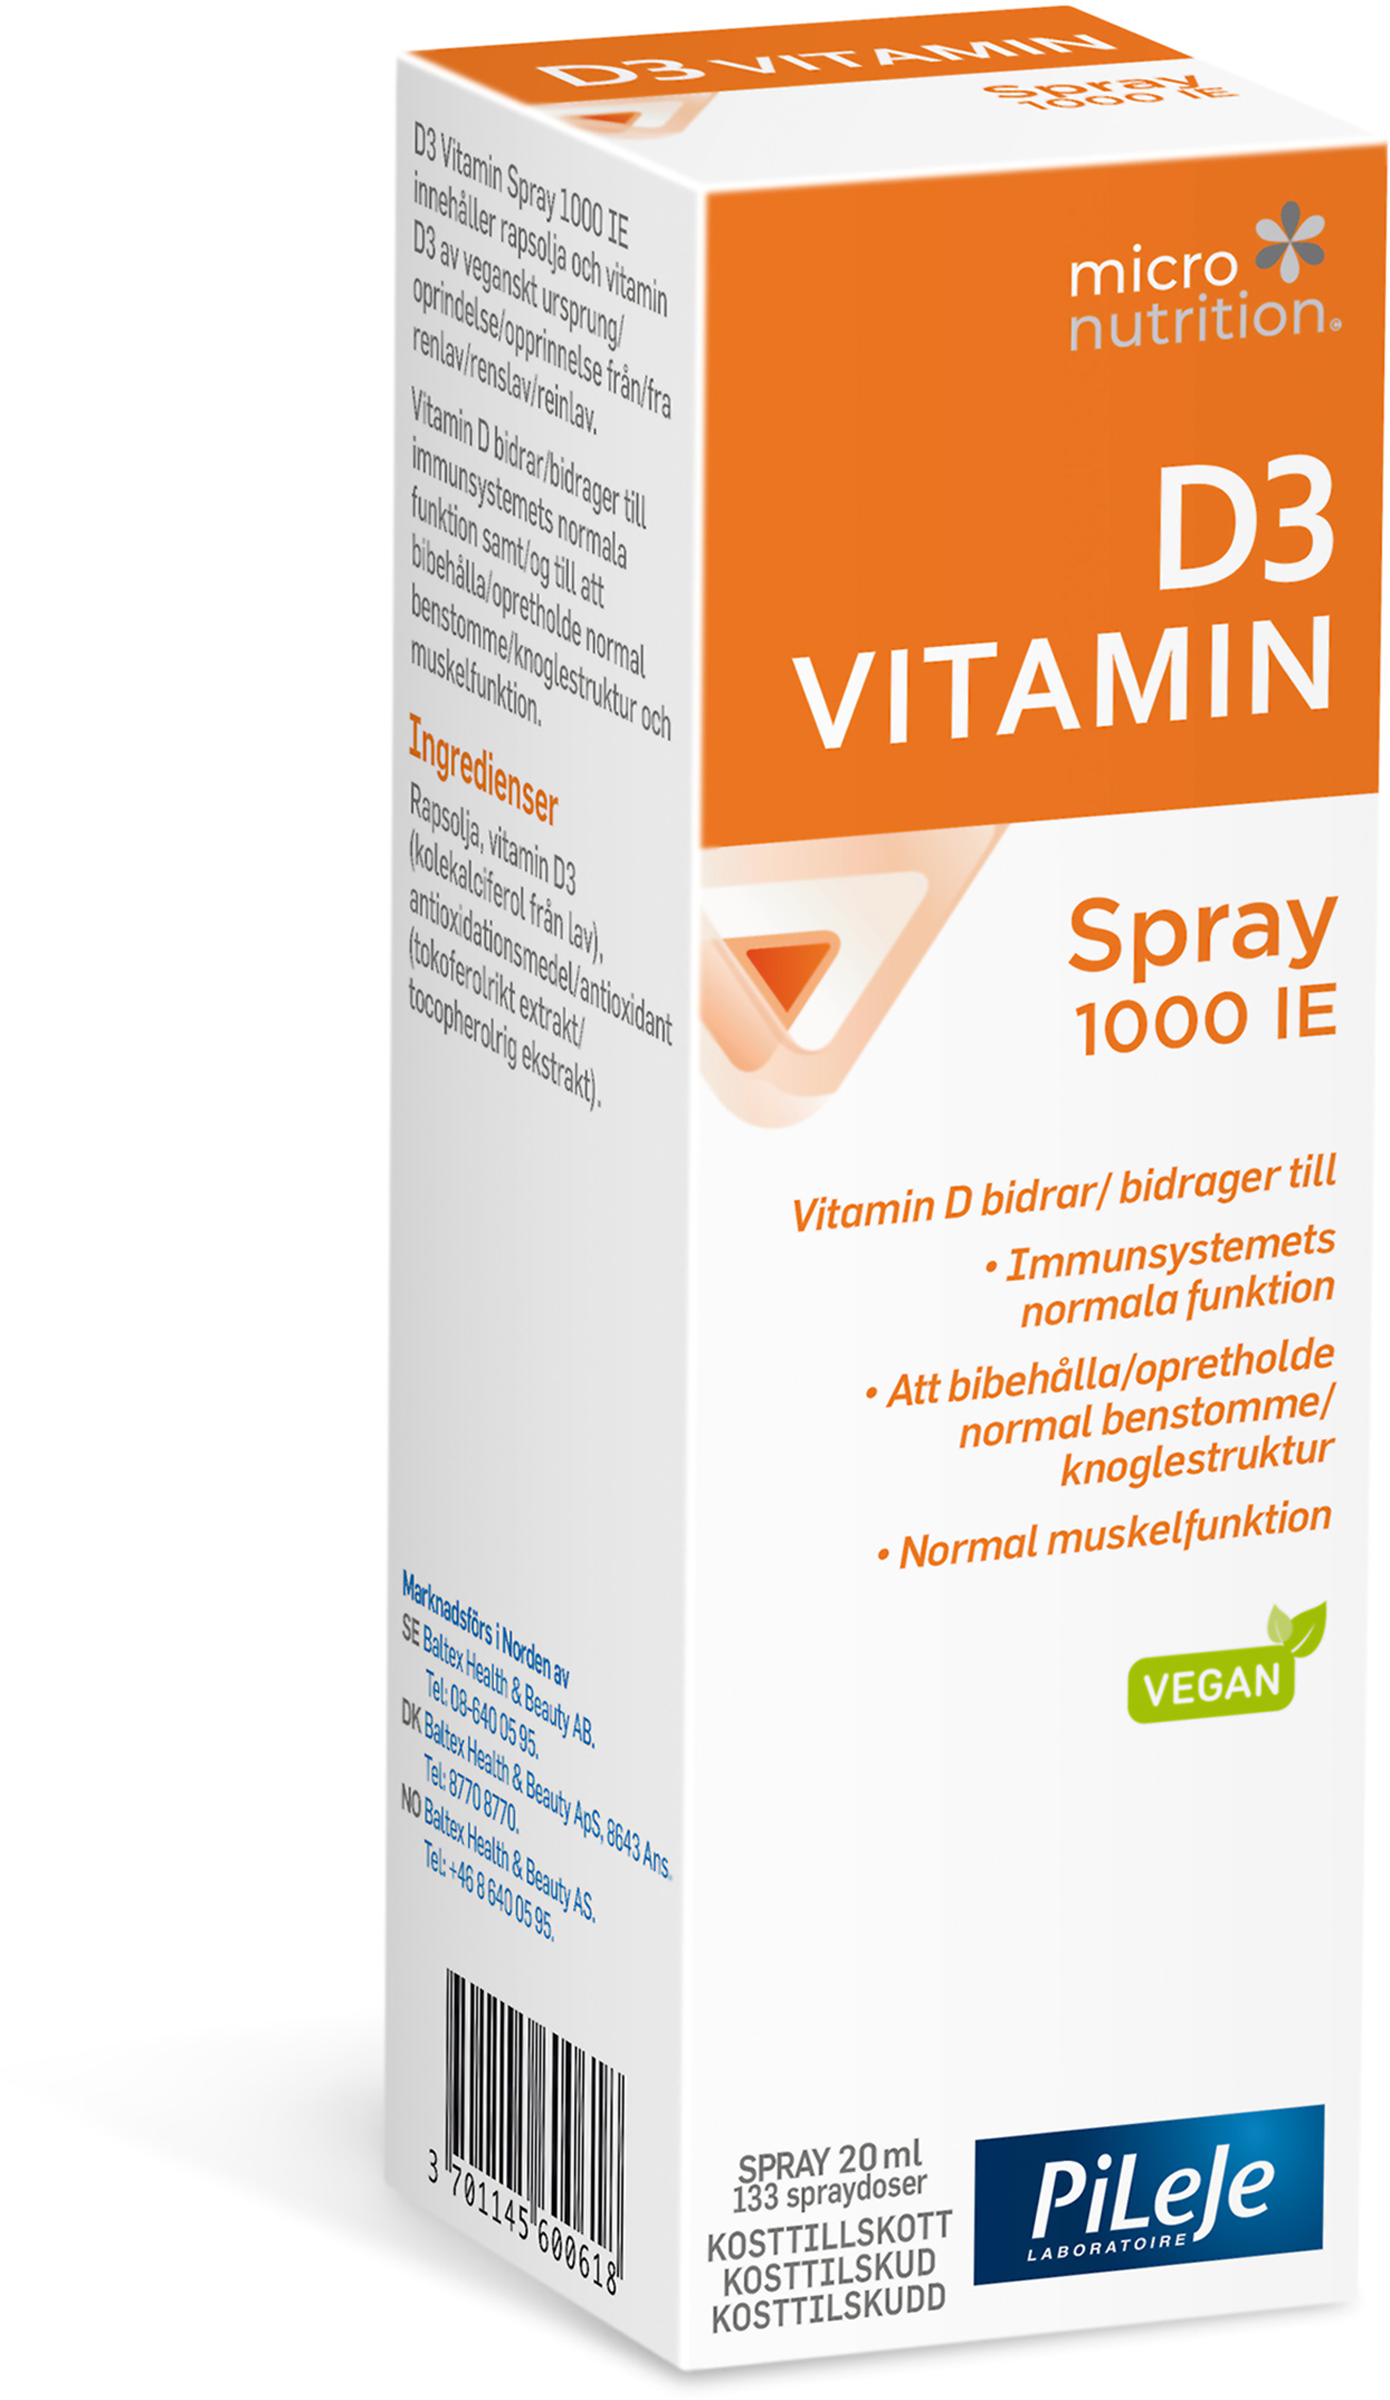 Micronutrition D3 Vitamin Spray 1000 IE 20 ml